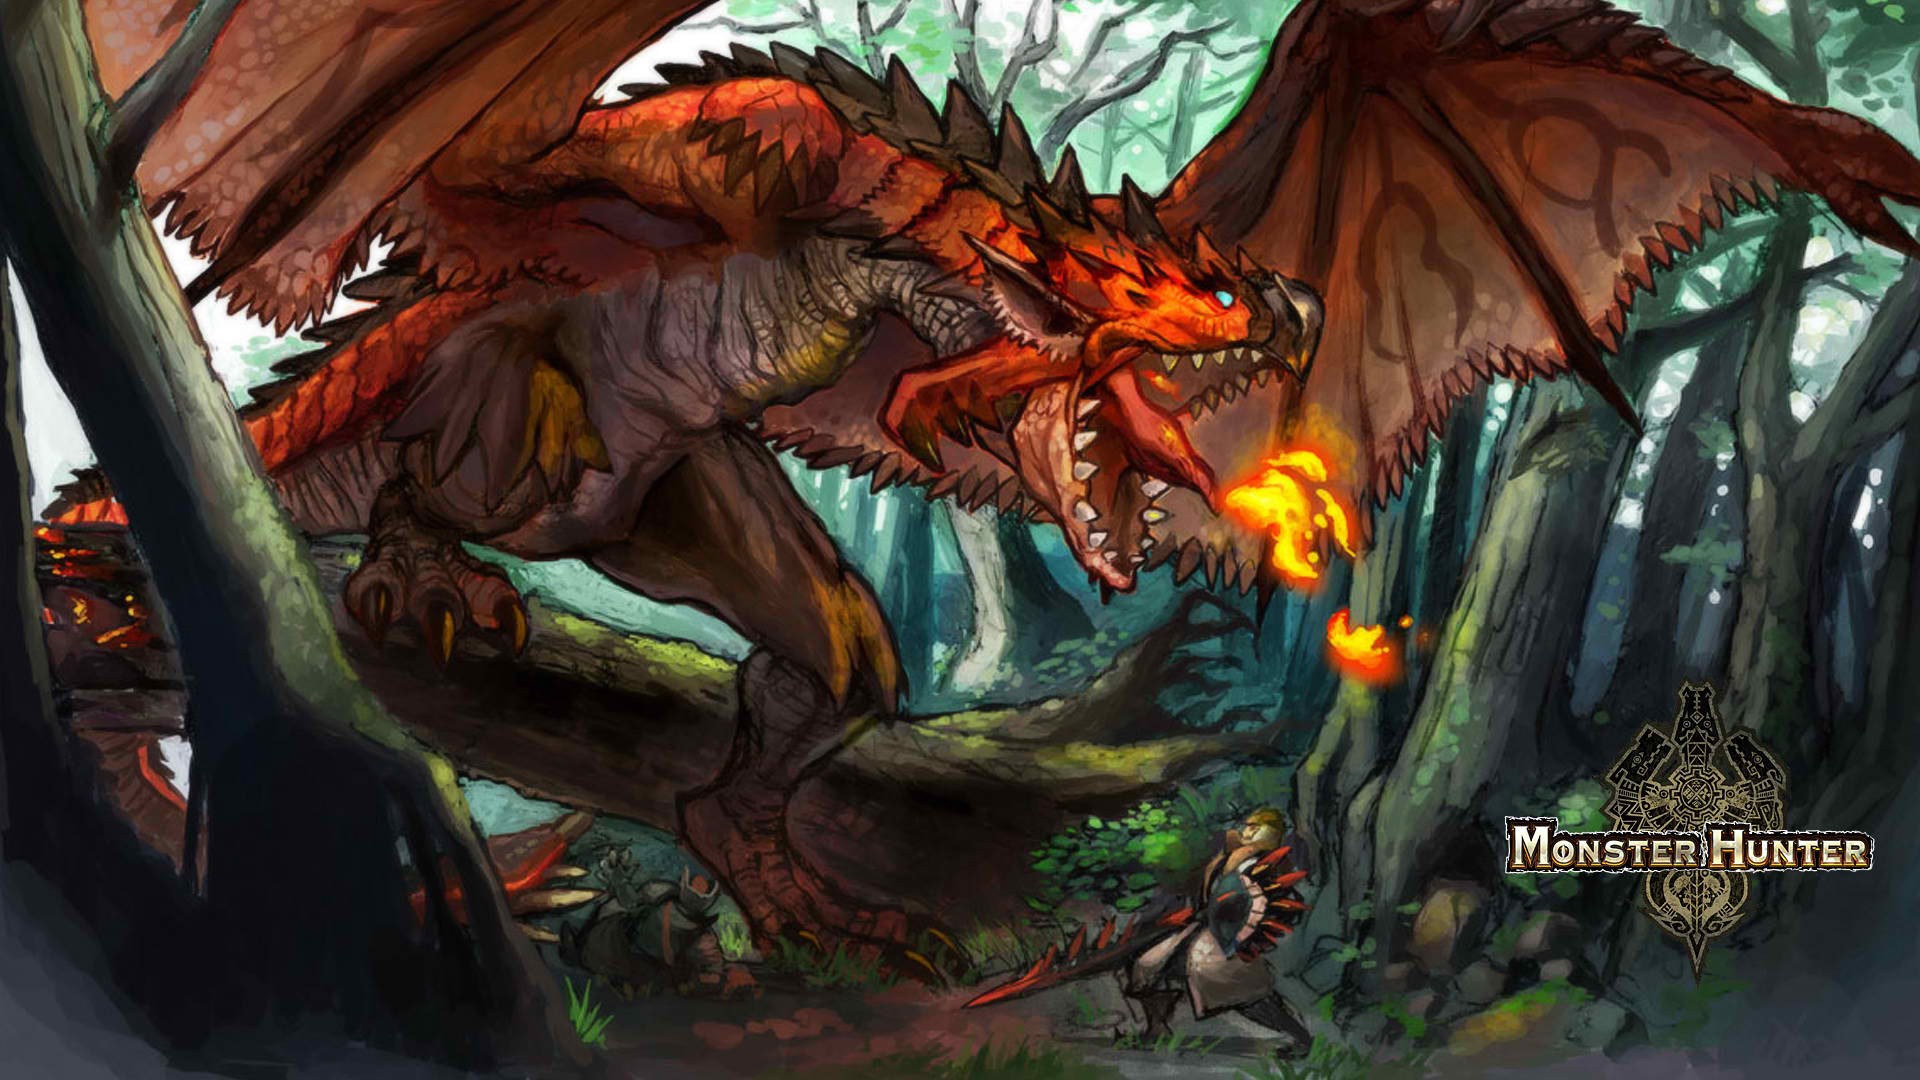 General 1920x1080 Monster Hunter Rathalos creature fantasy art video games video game art dragon